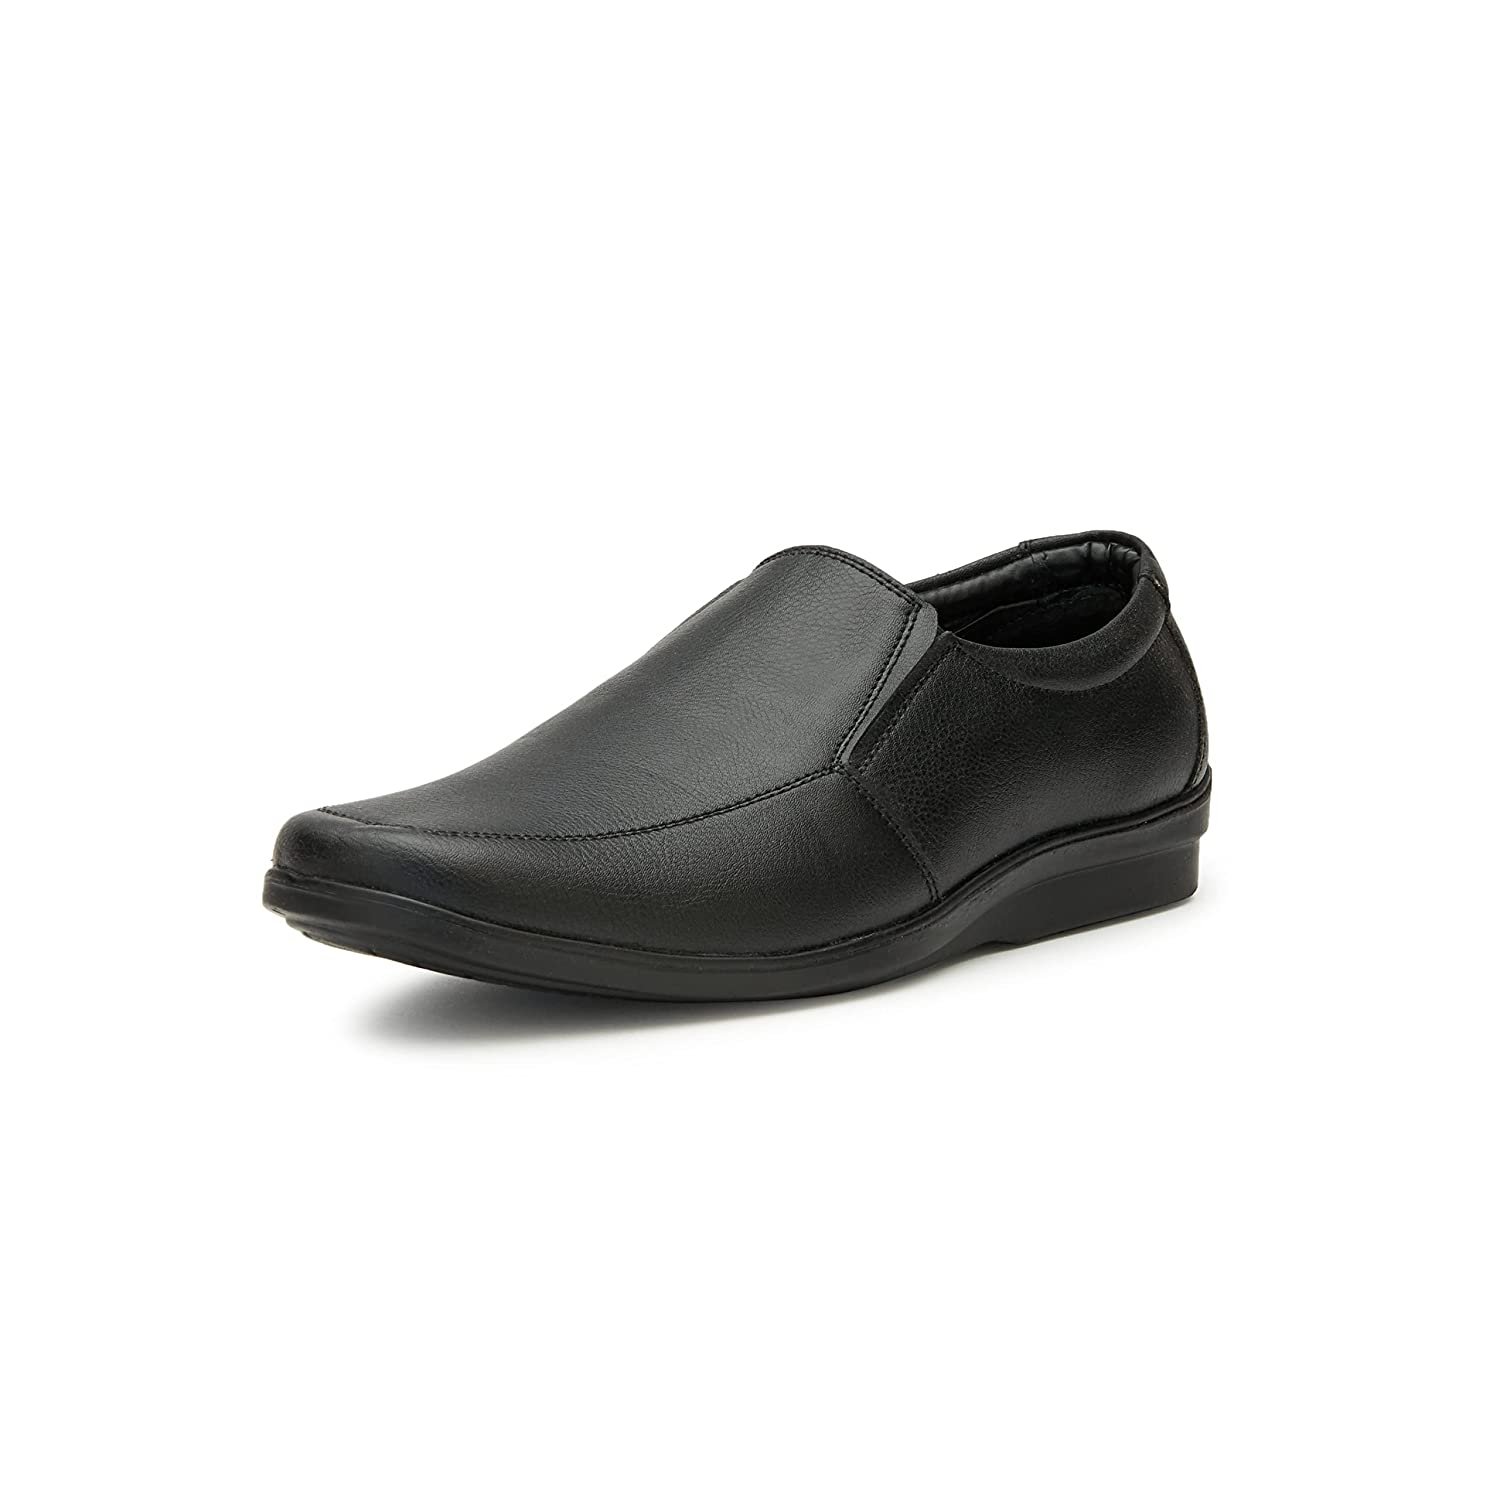 BATA shoes formal black shoes